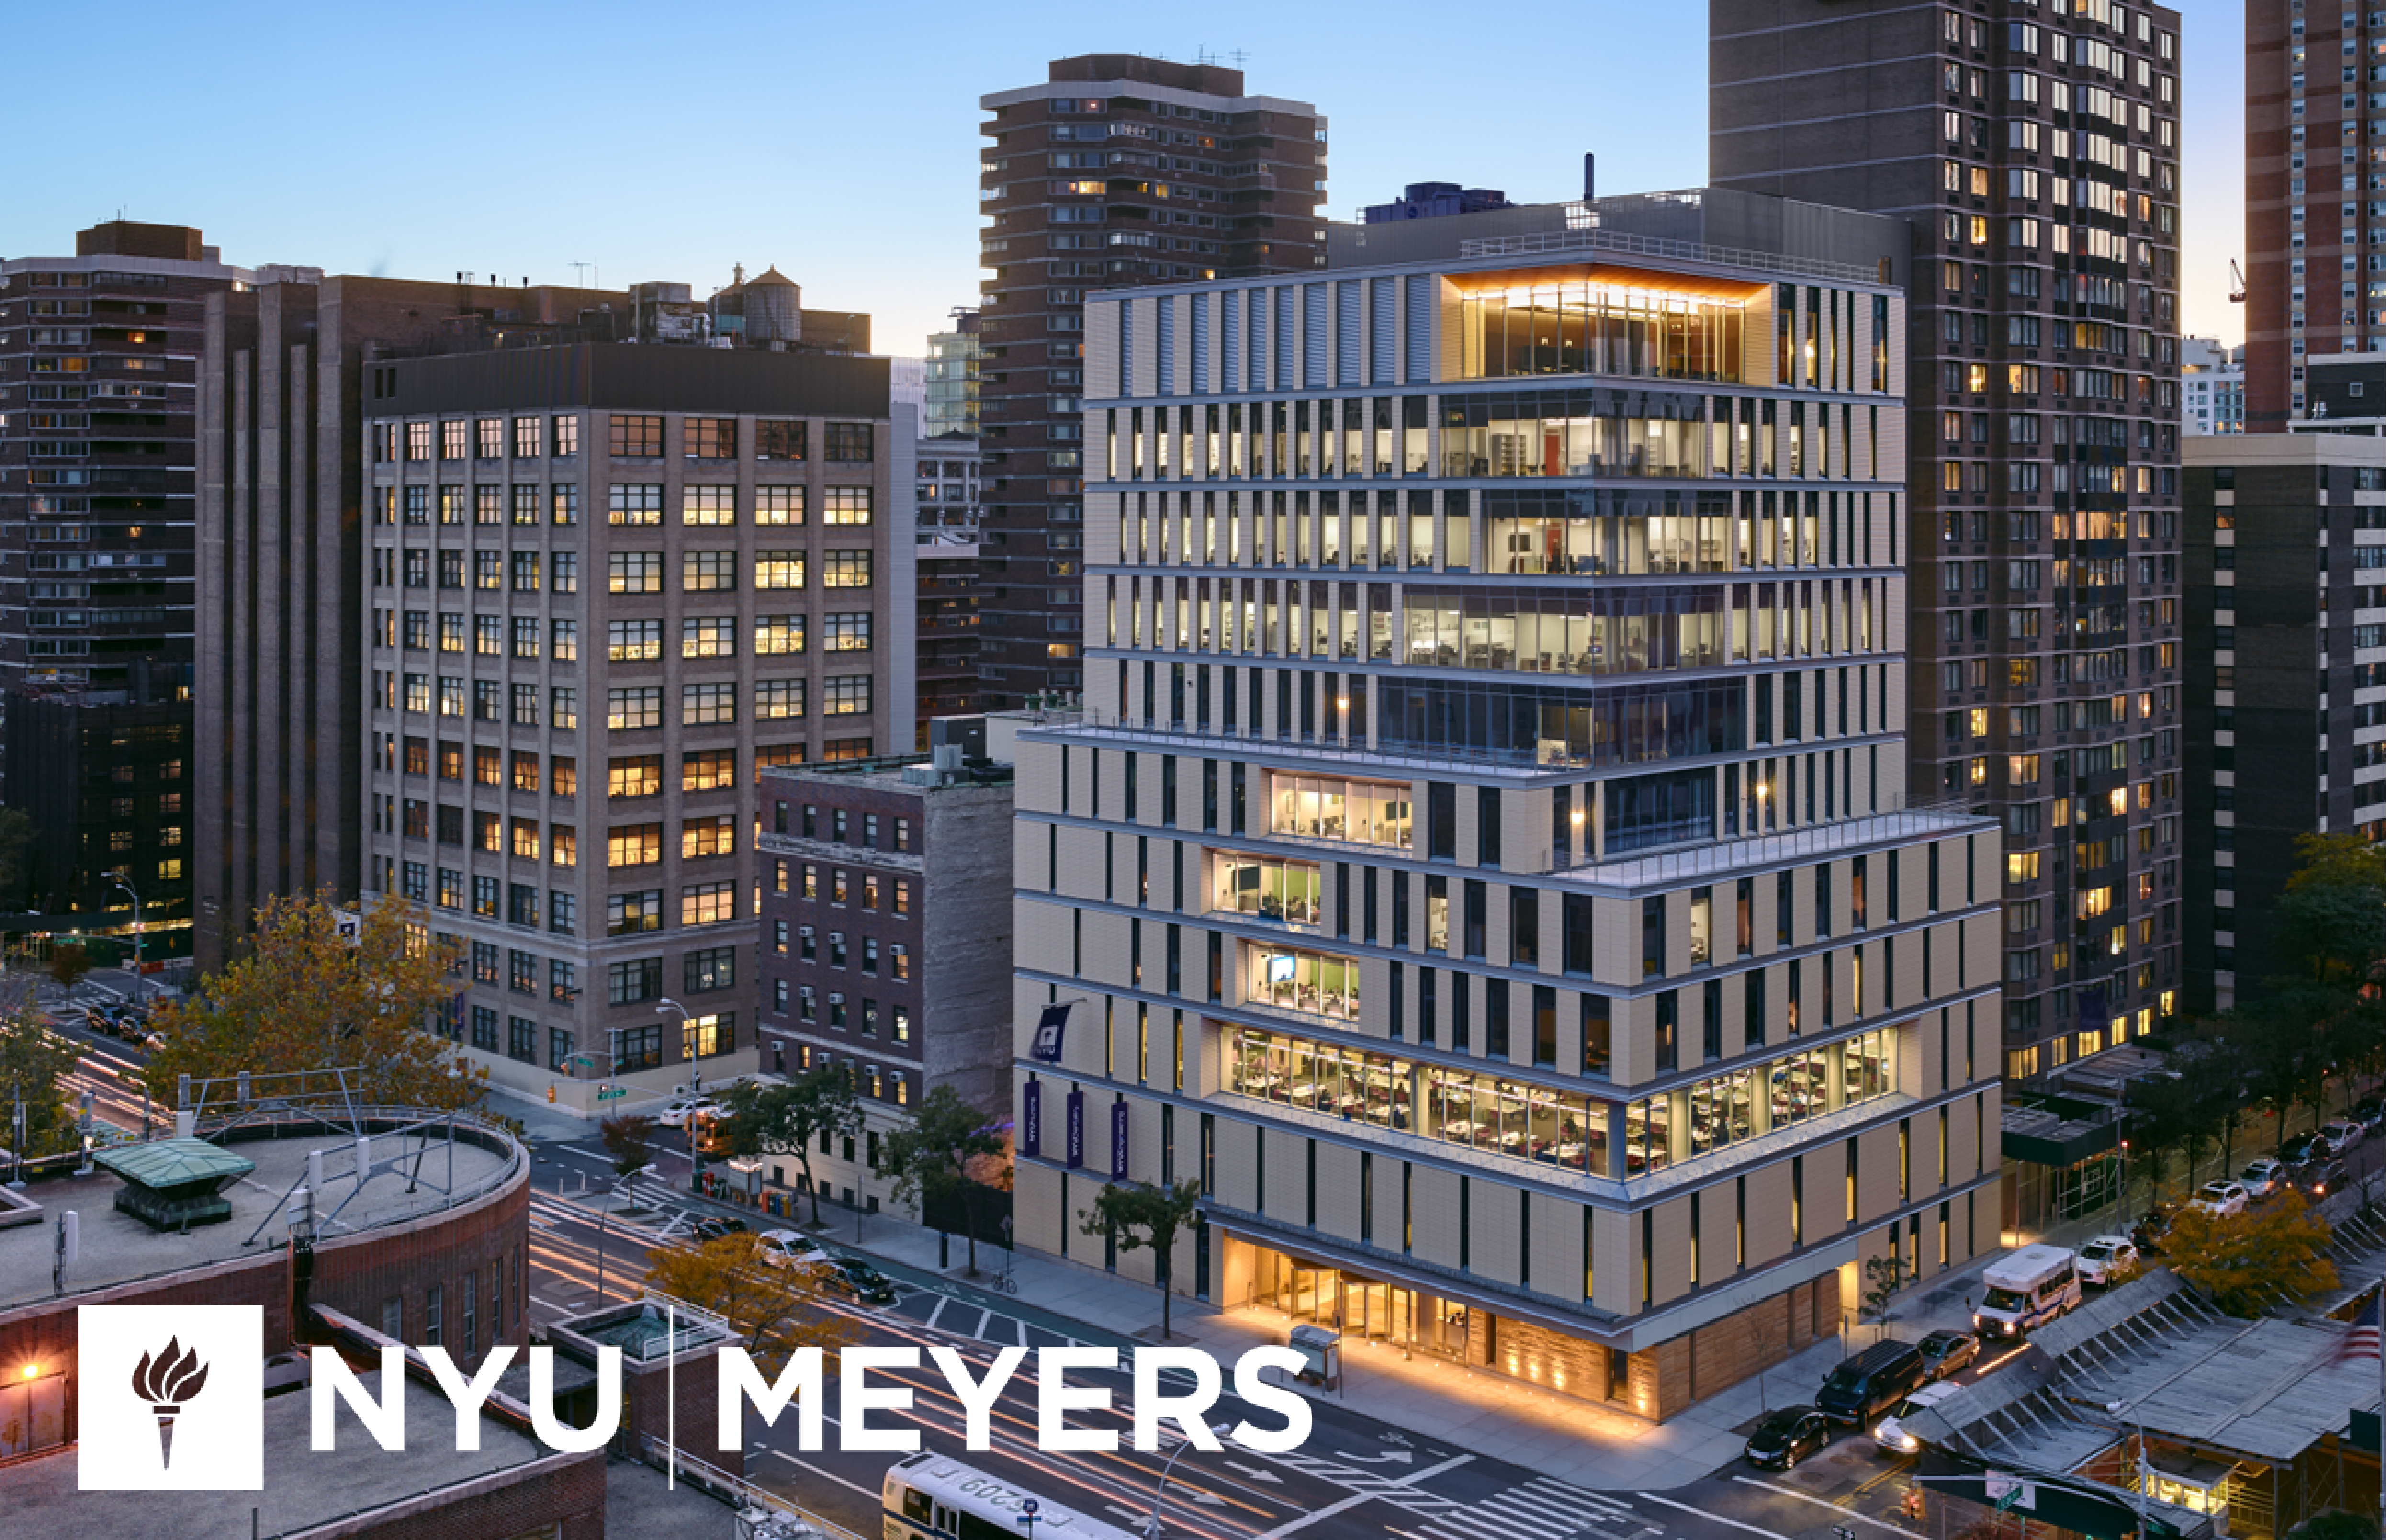 NYU Meyers building